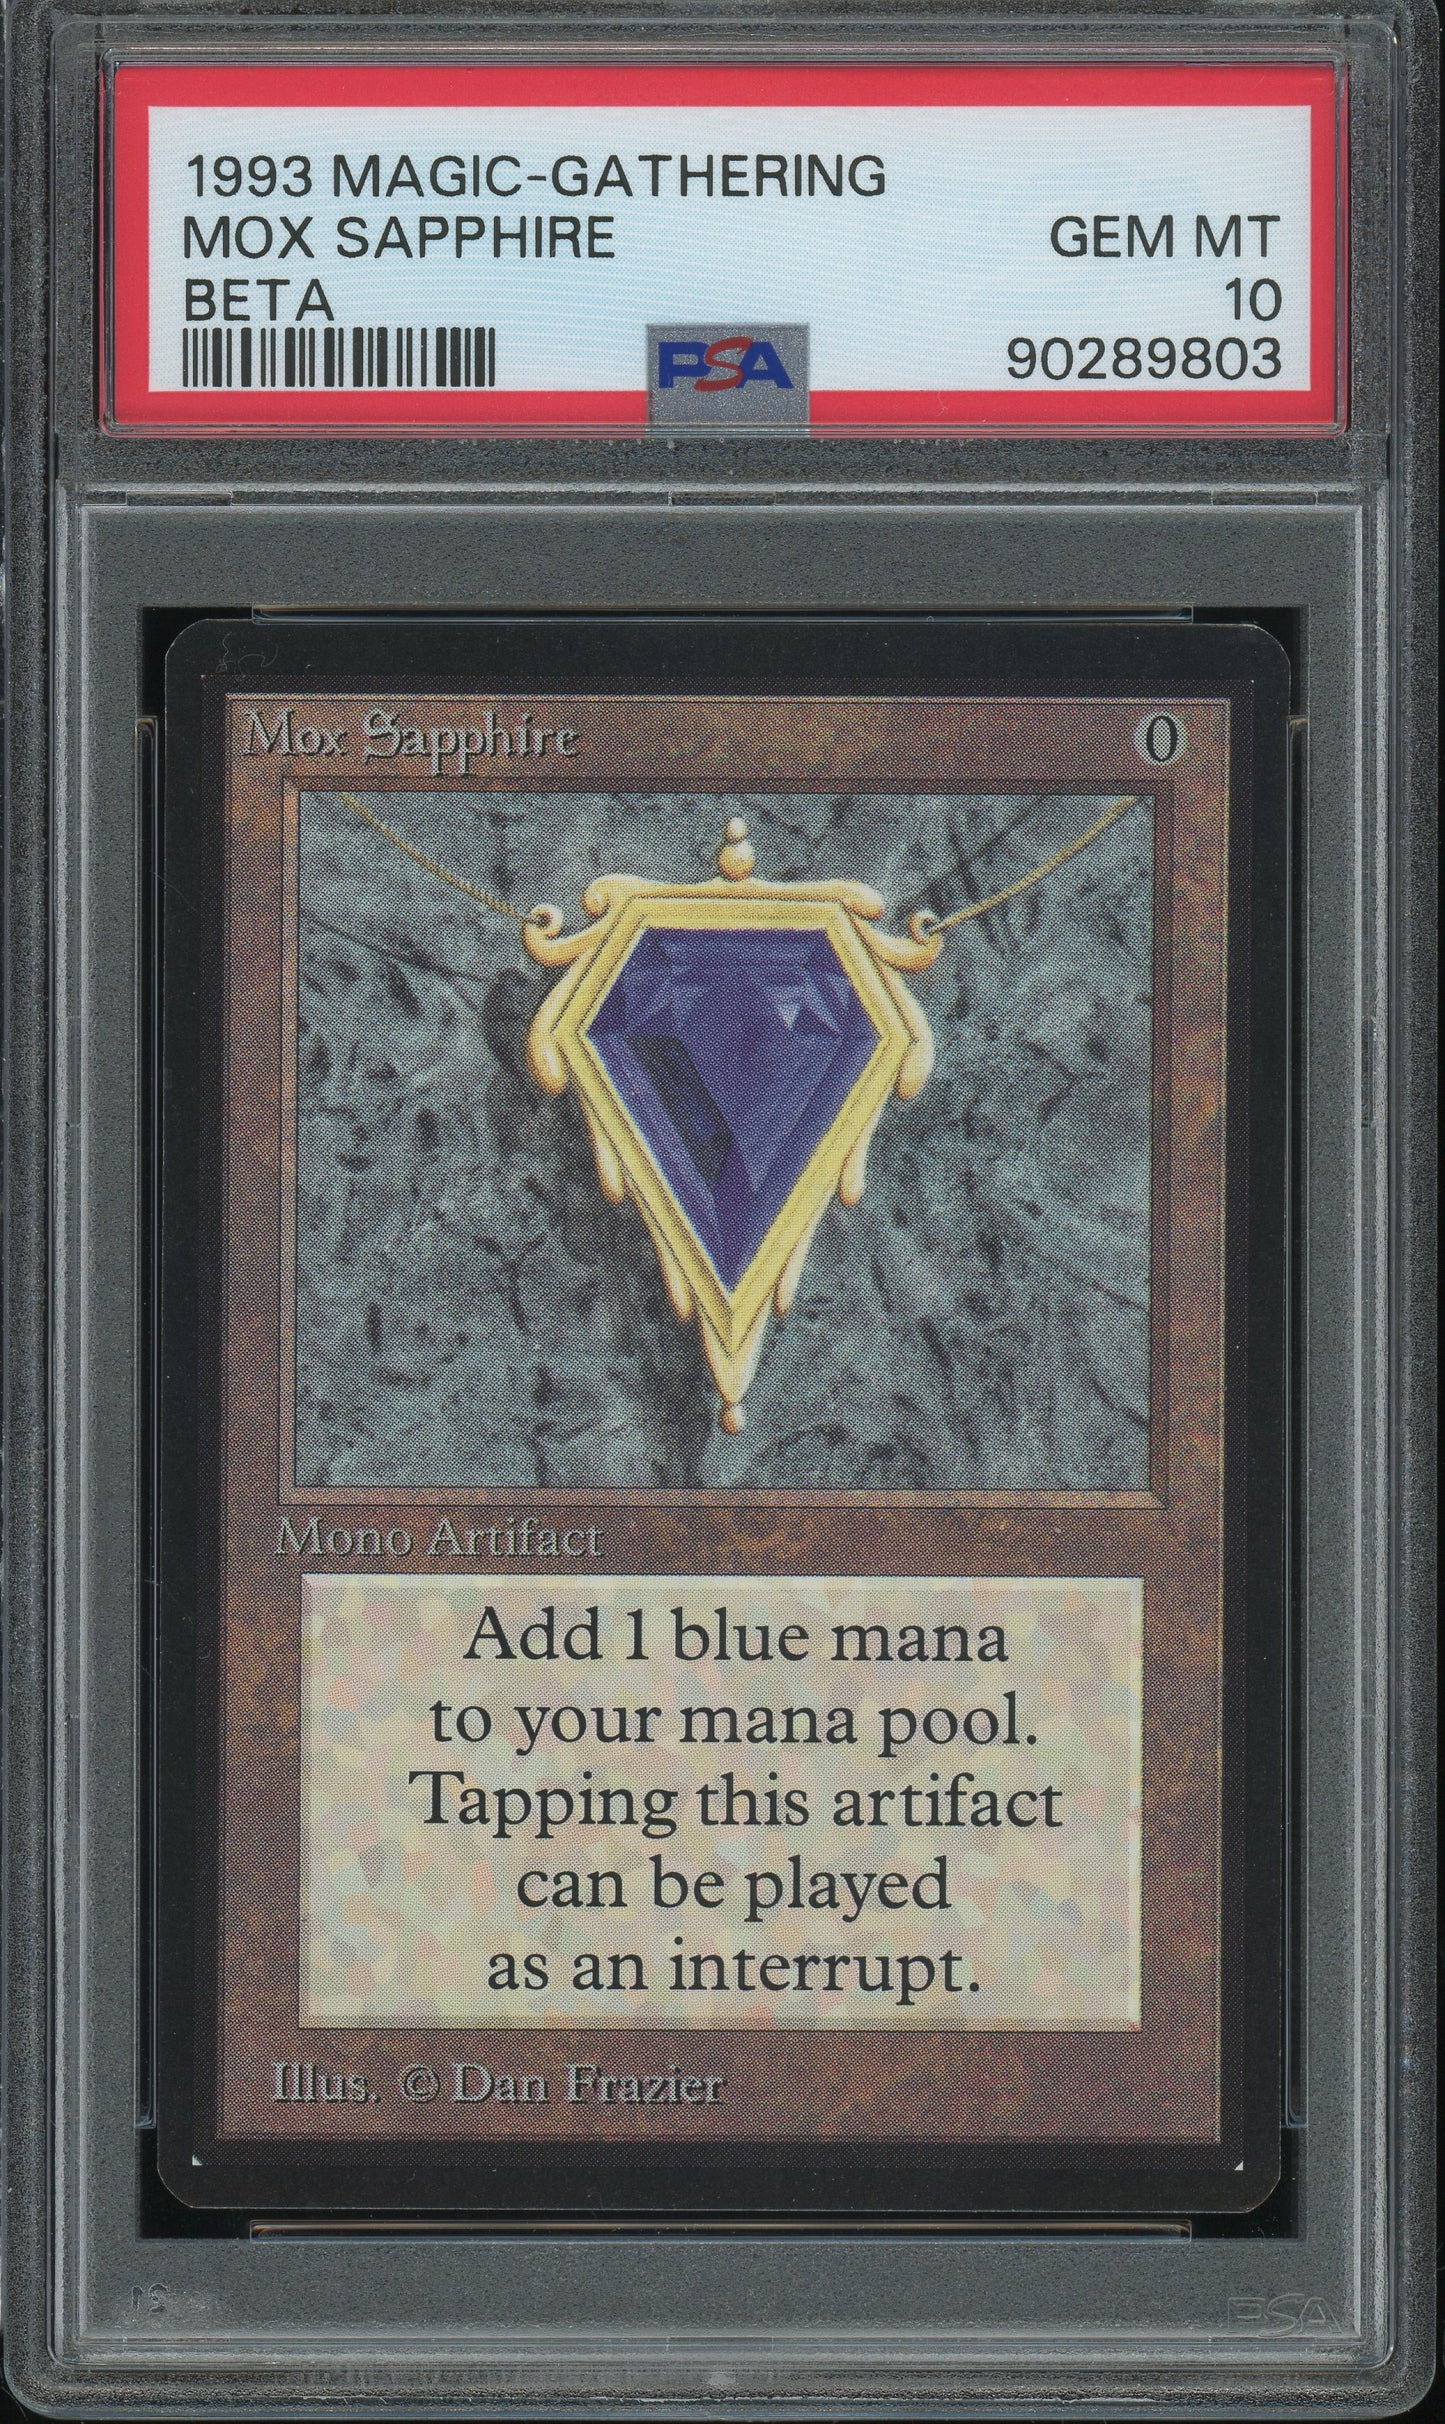 Mox Sapphire - Beta PSA 10 - 90289803